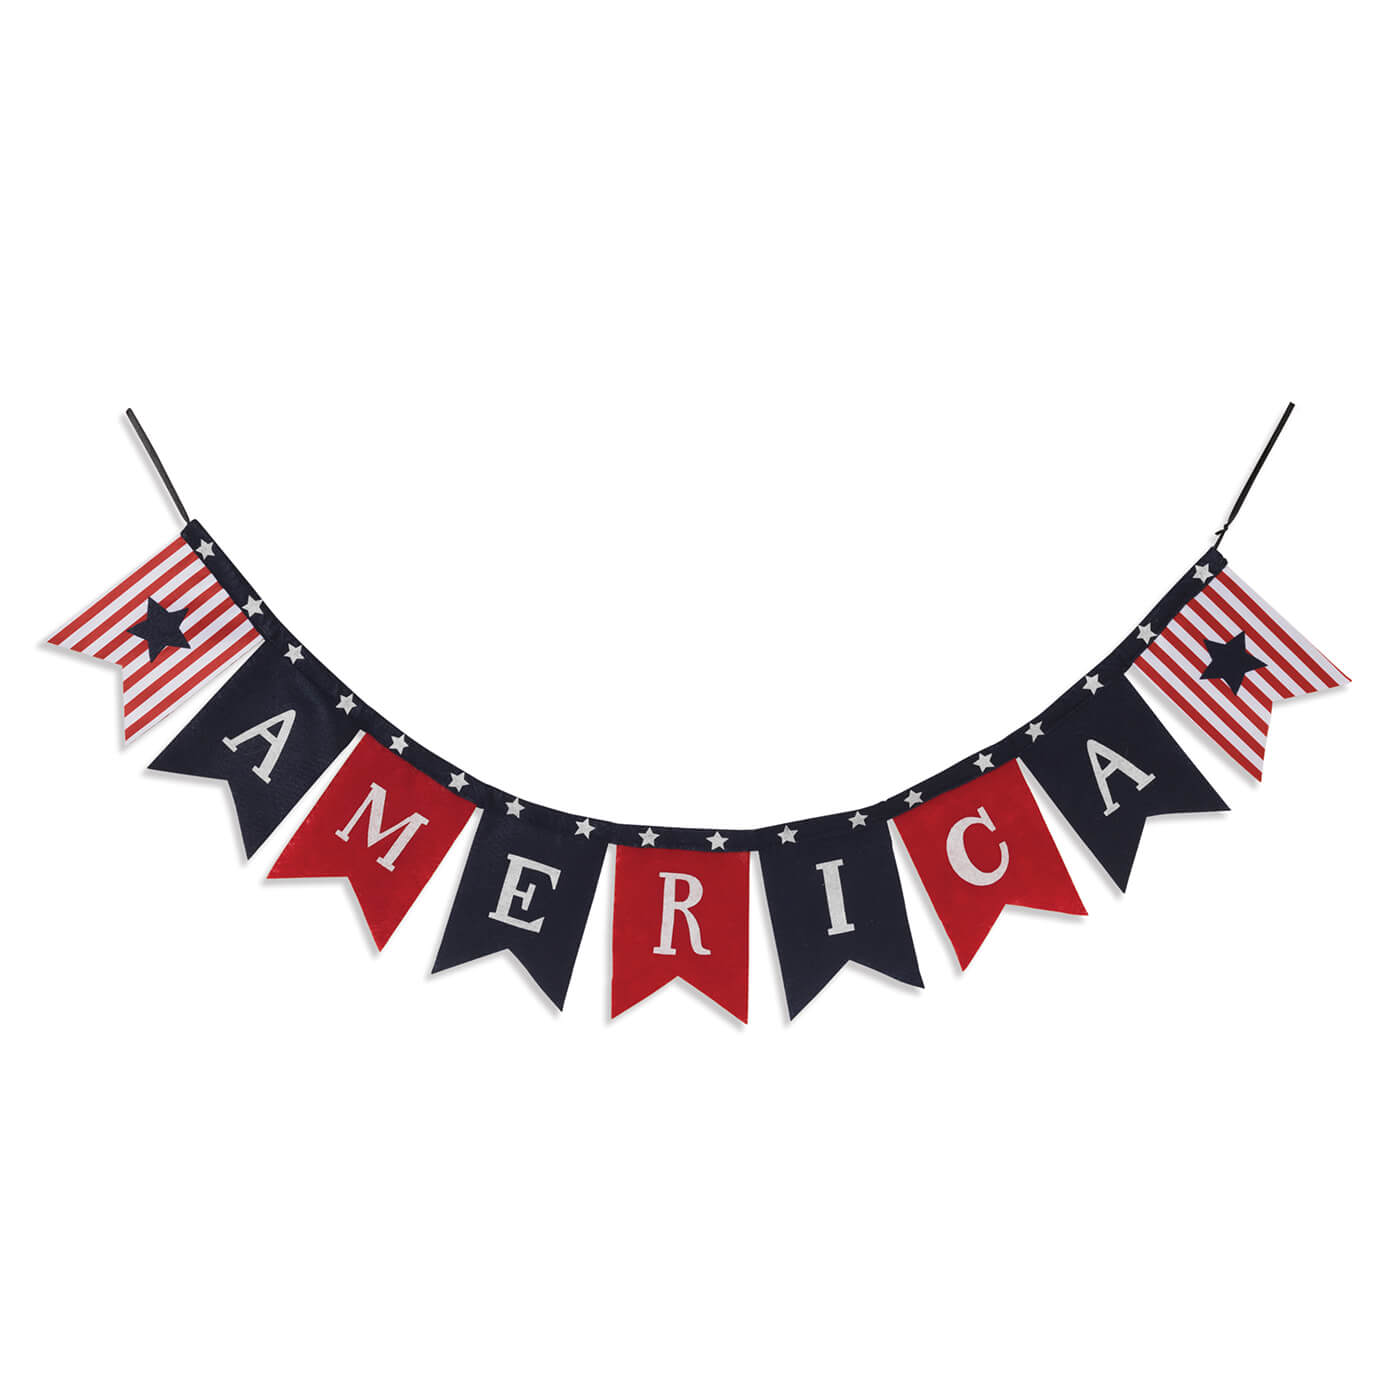 5ft Fabric Americana Banner